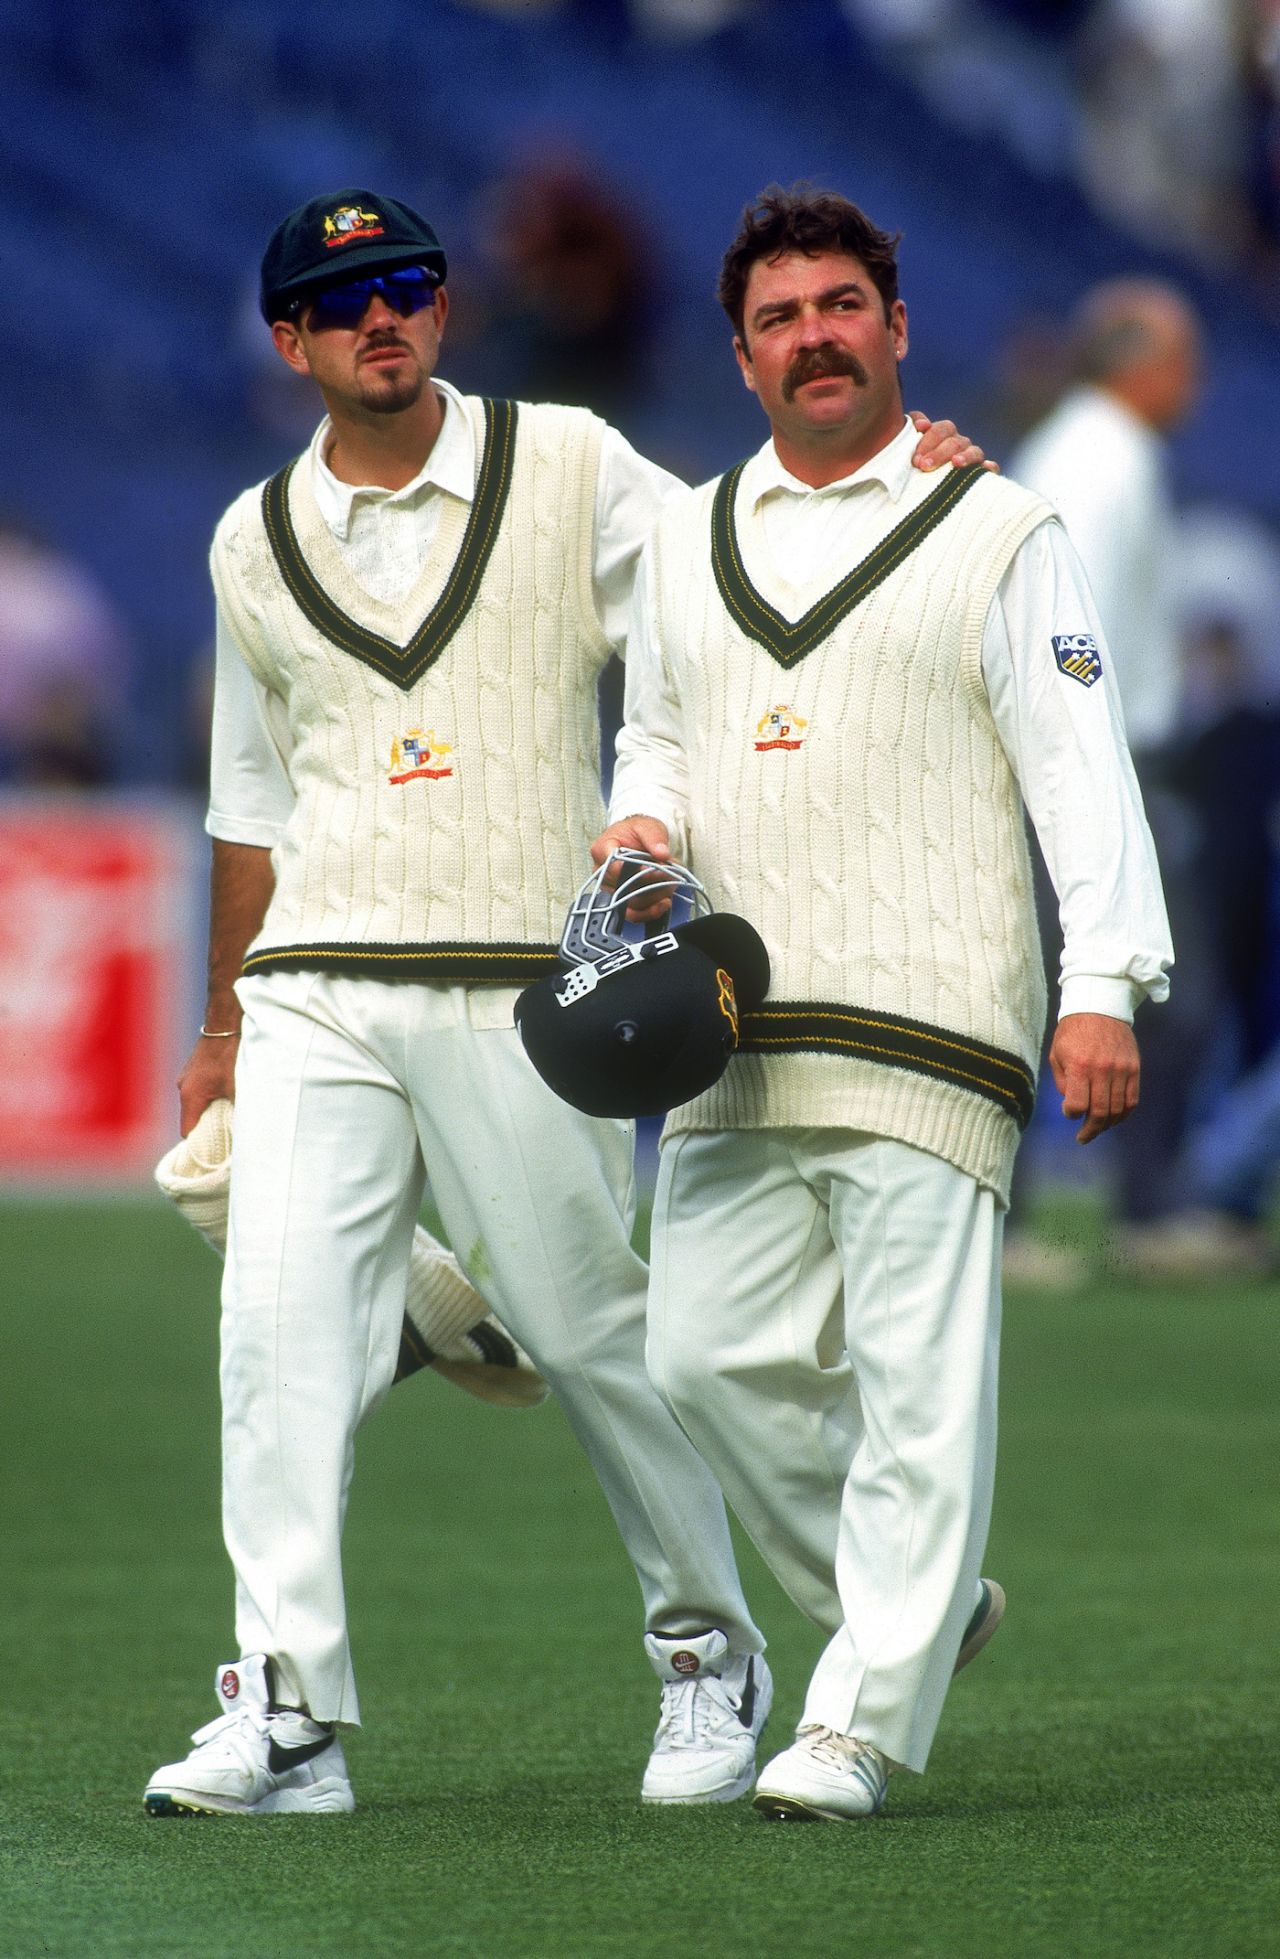 David Boon and Ricky Ponting walk back, 1st day, 2nd Test, Australia v Sri Lanka. MCG, December 26, 1995